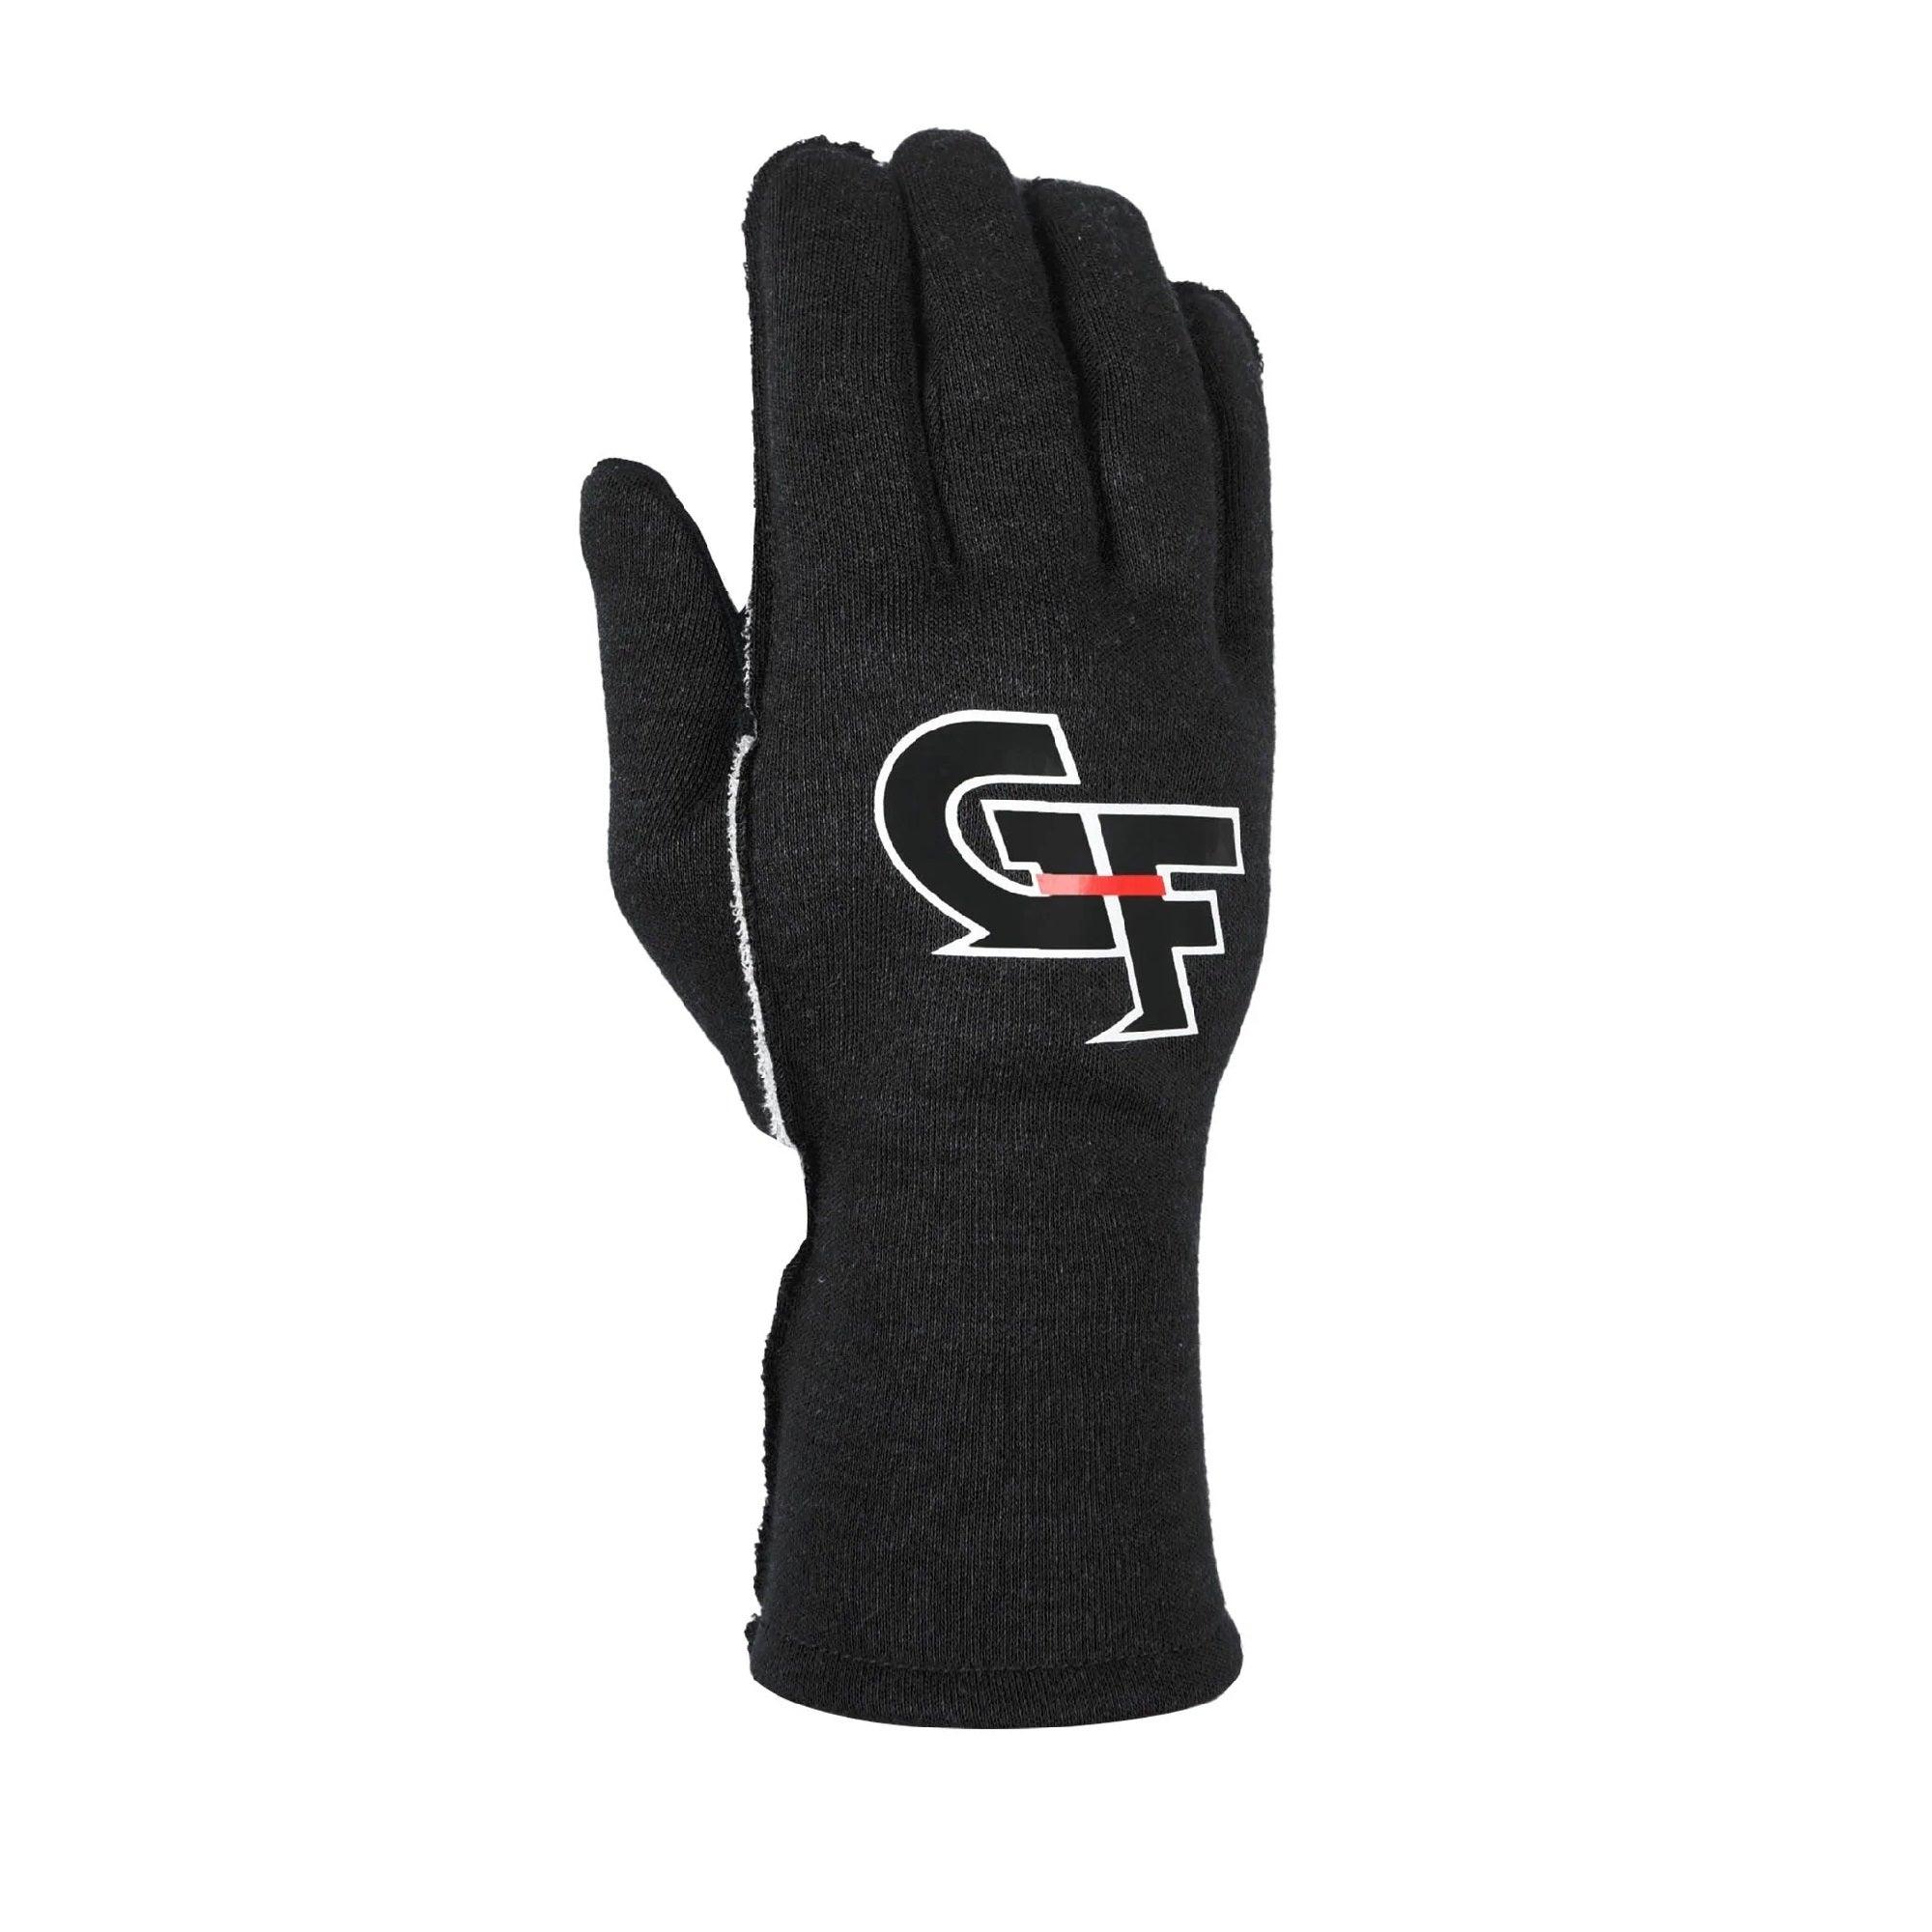 Gloves G-Limit Youth Medium Black - Burlile Performance Products